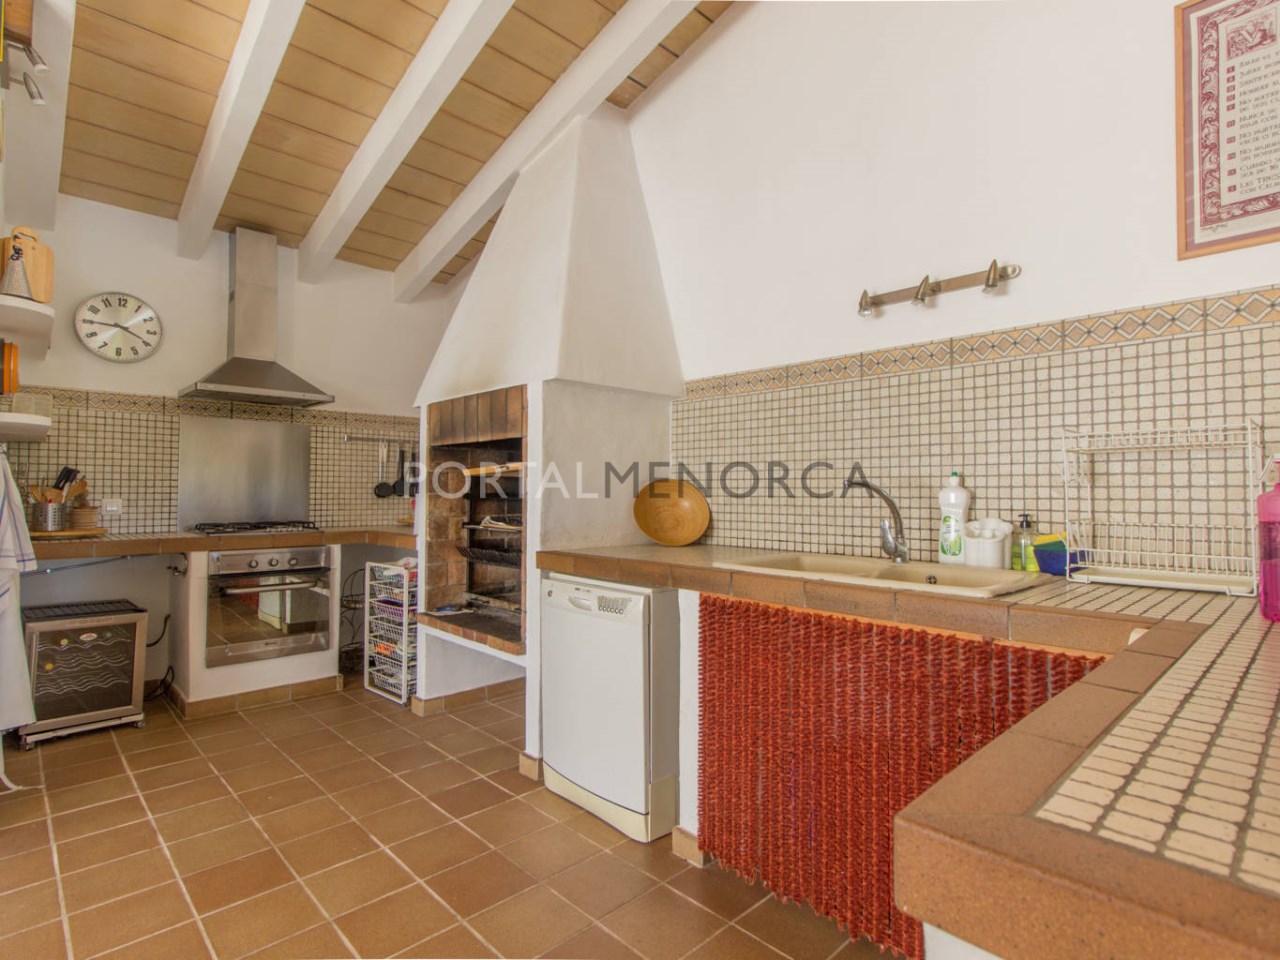 Casa de campo en venta en Menorca - Anexo (1)